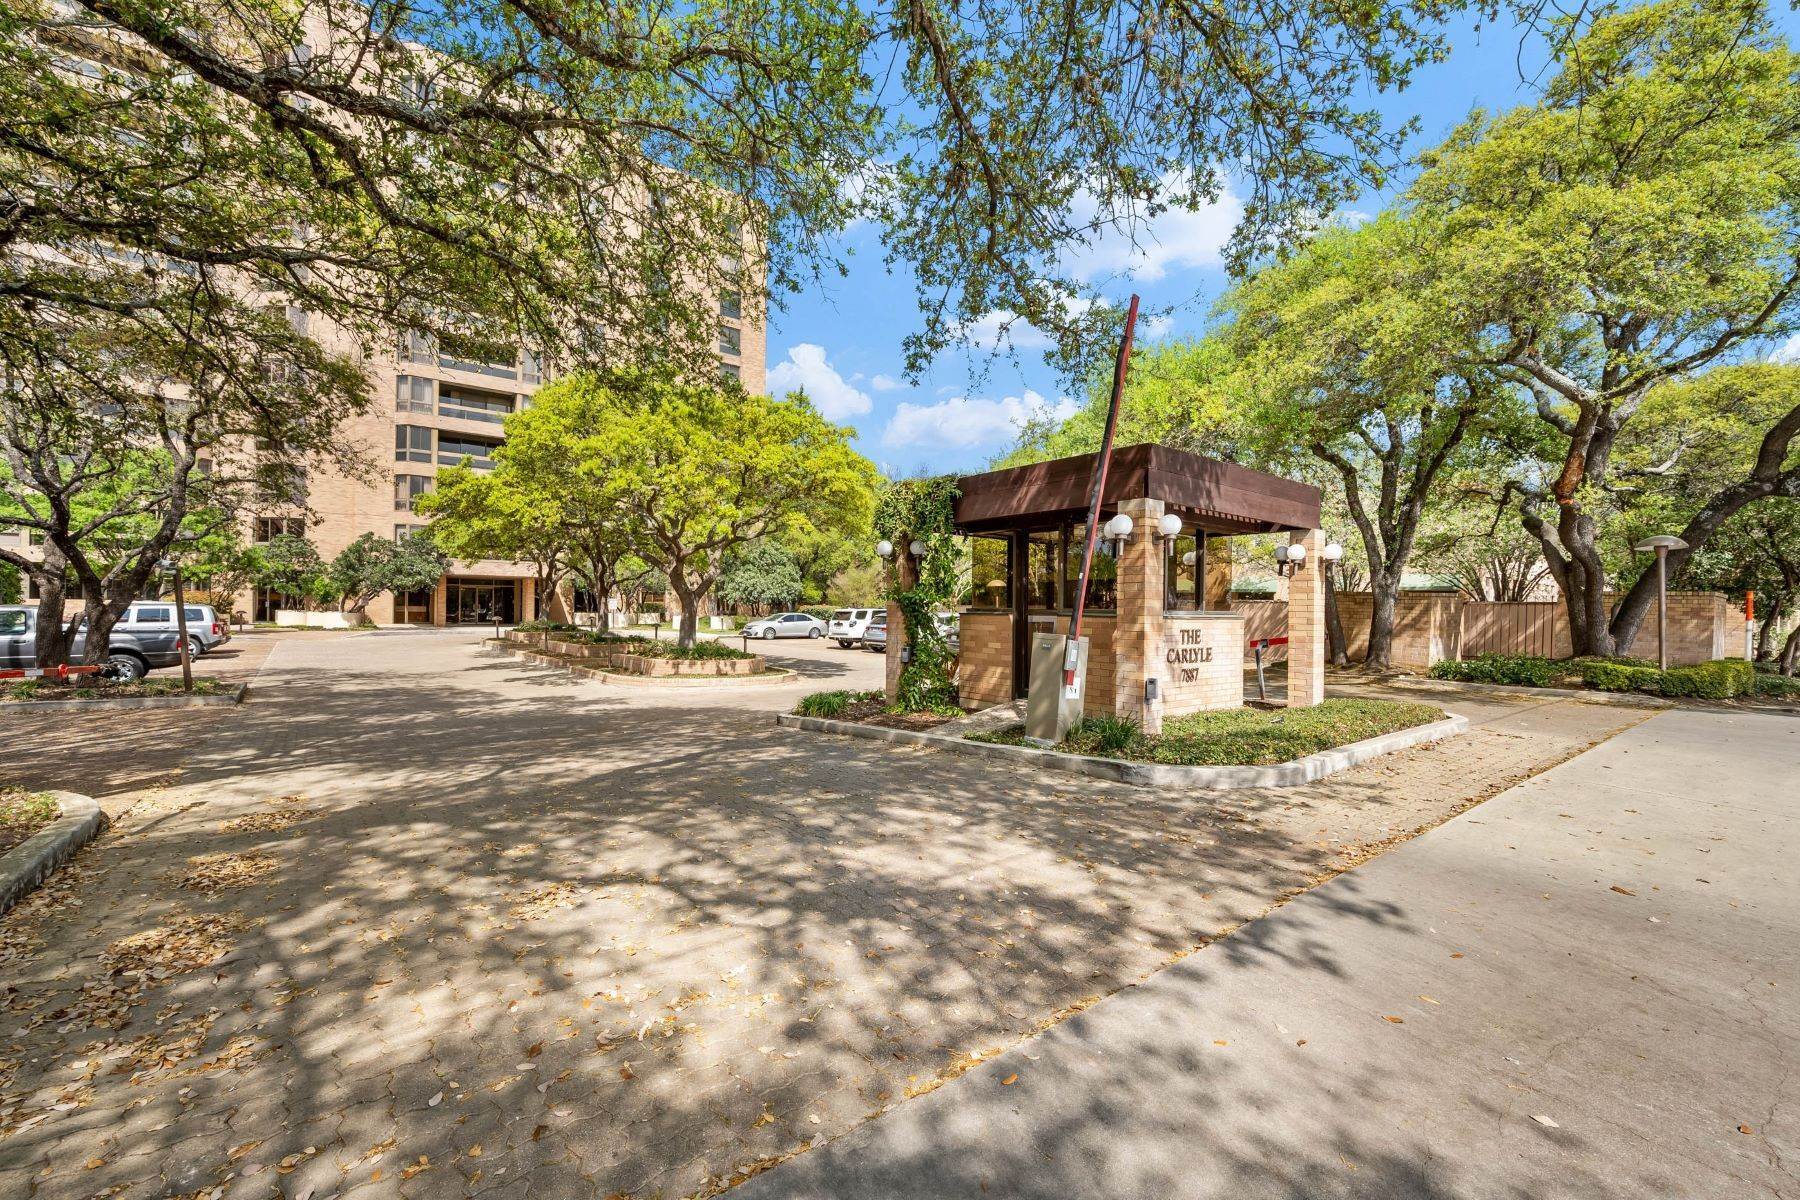 2. Condominiums at 7887 Broadway St. #401 San Antonio, Texas 78209 United States